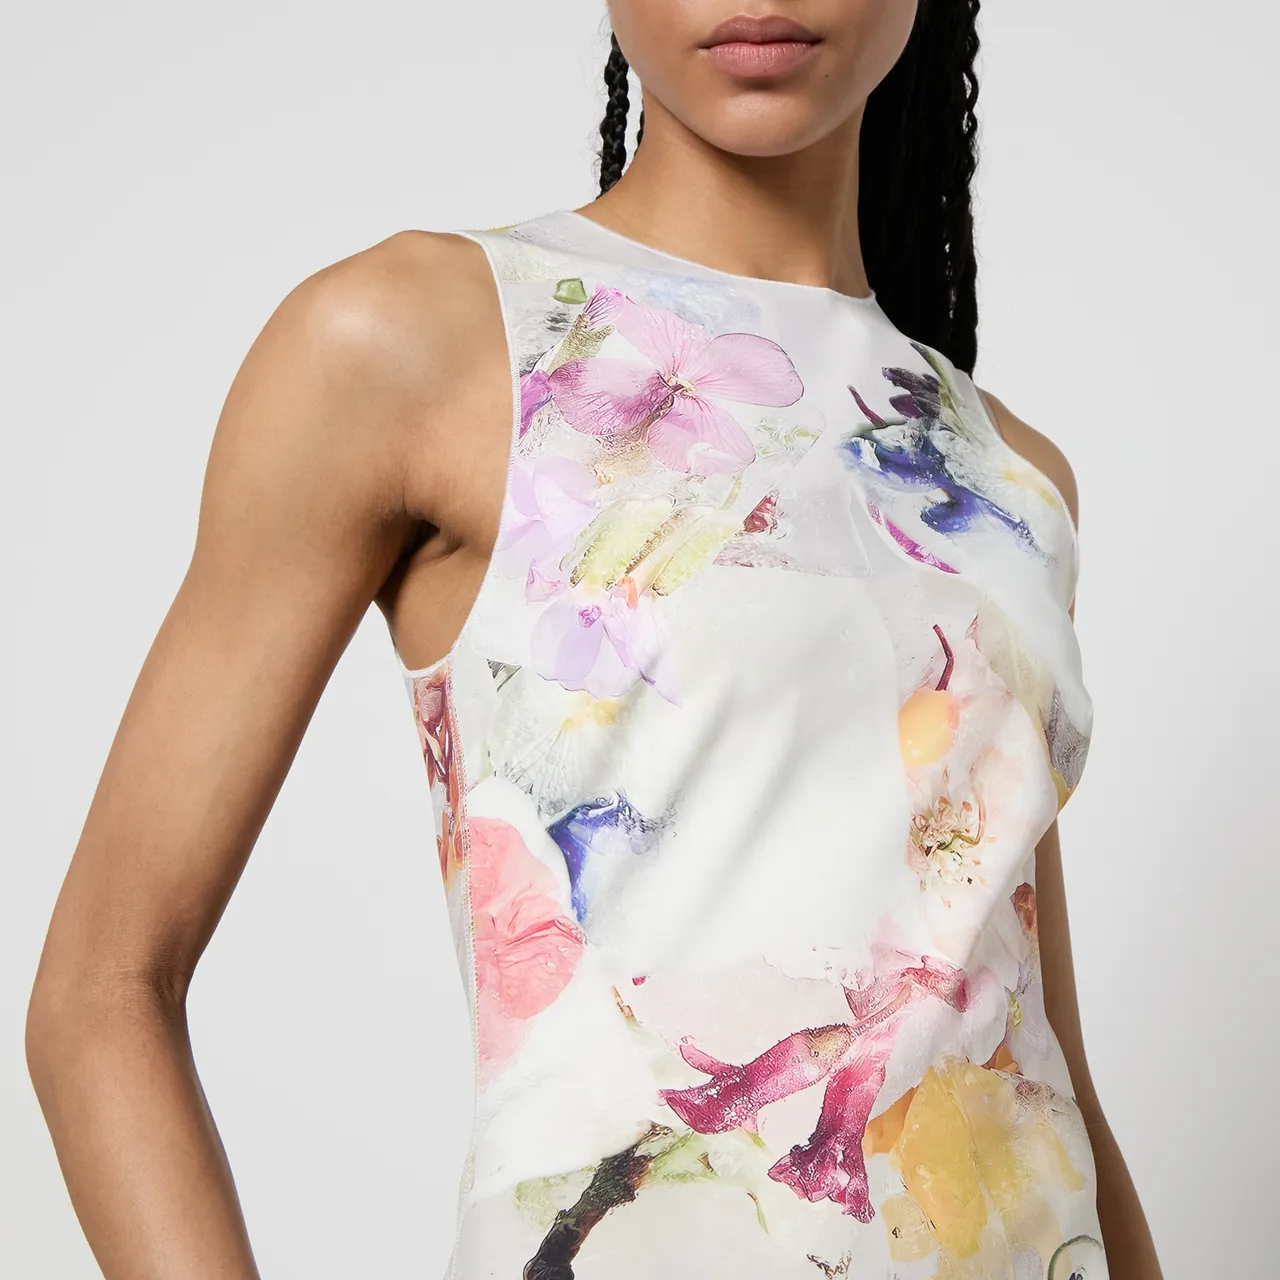 Ted Baker Lilyha Floral-Print Scuba Midi Dress